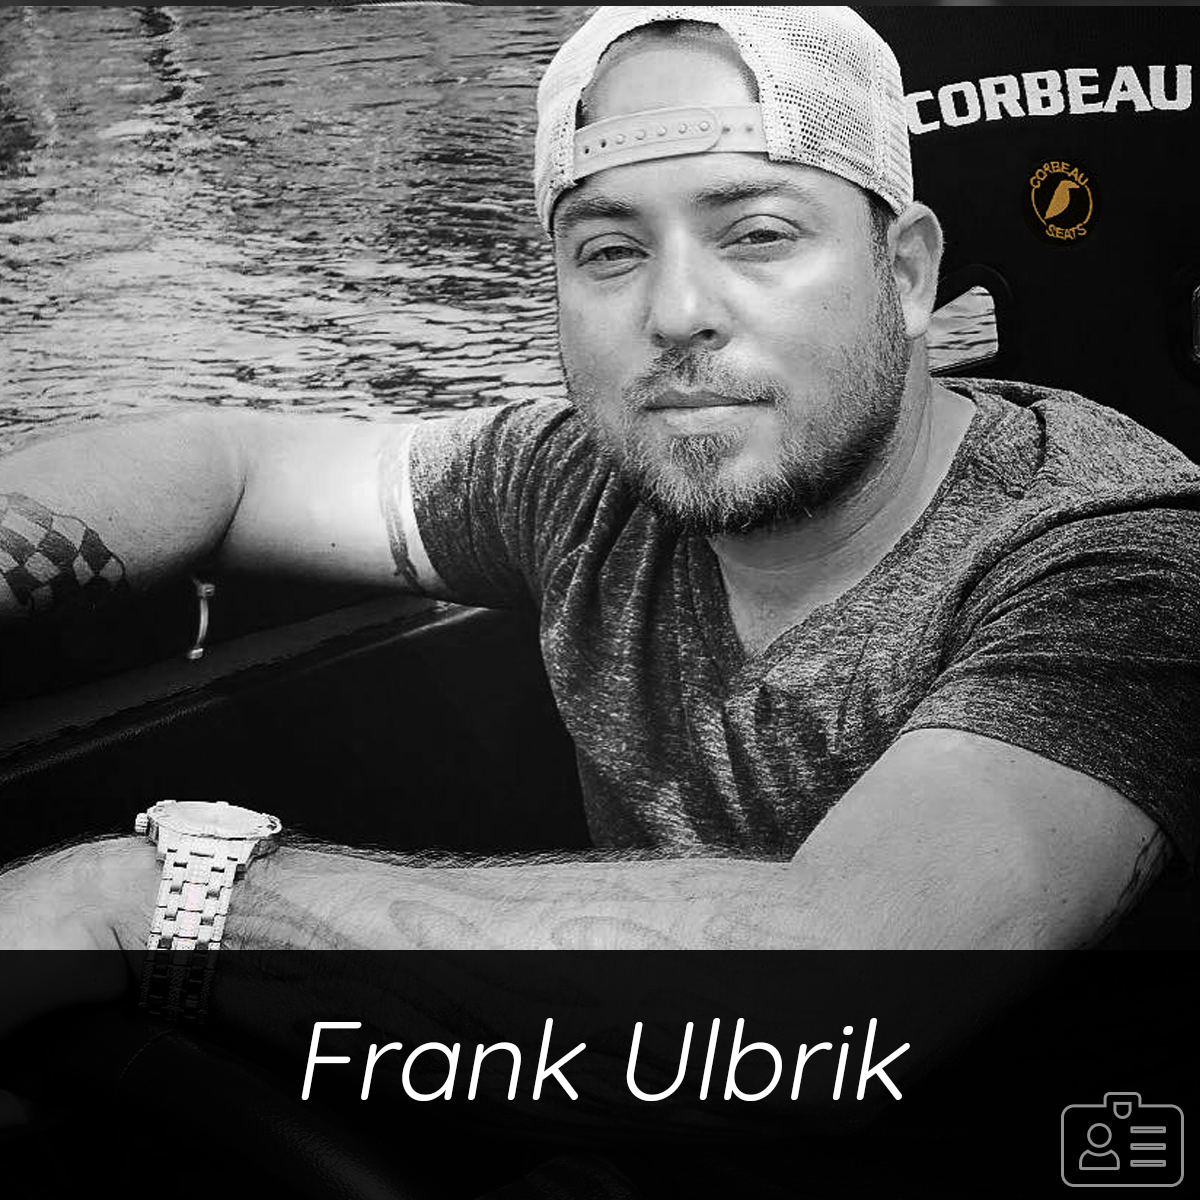 Frank Ulbrik - RC Racer - ProTek Pro Team